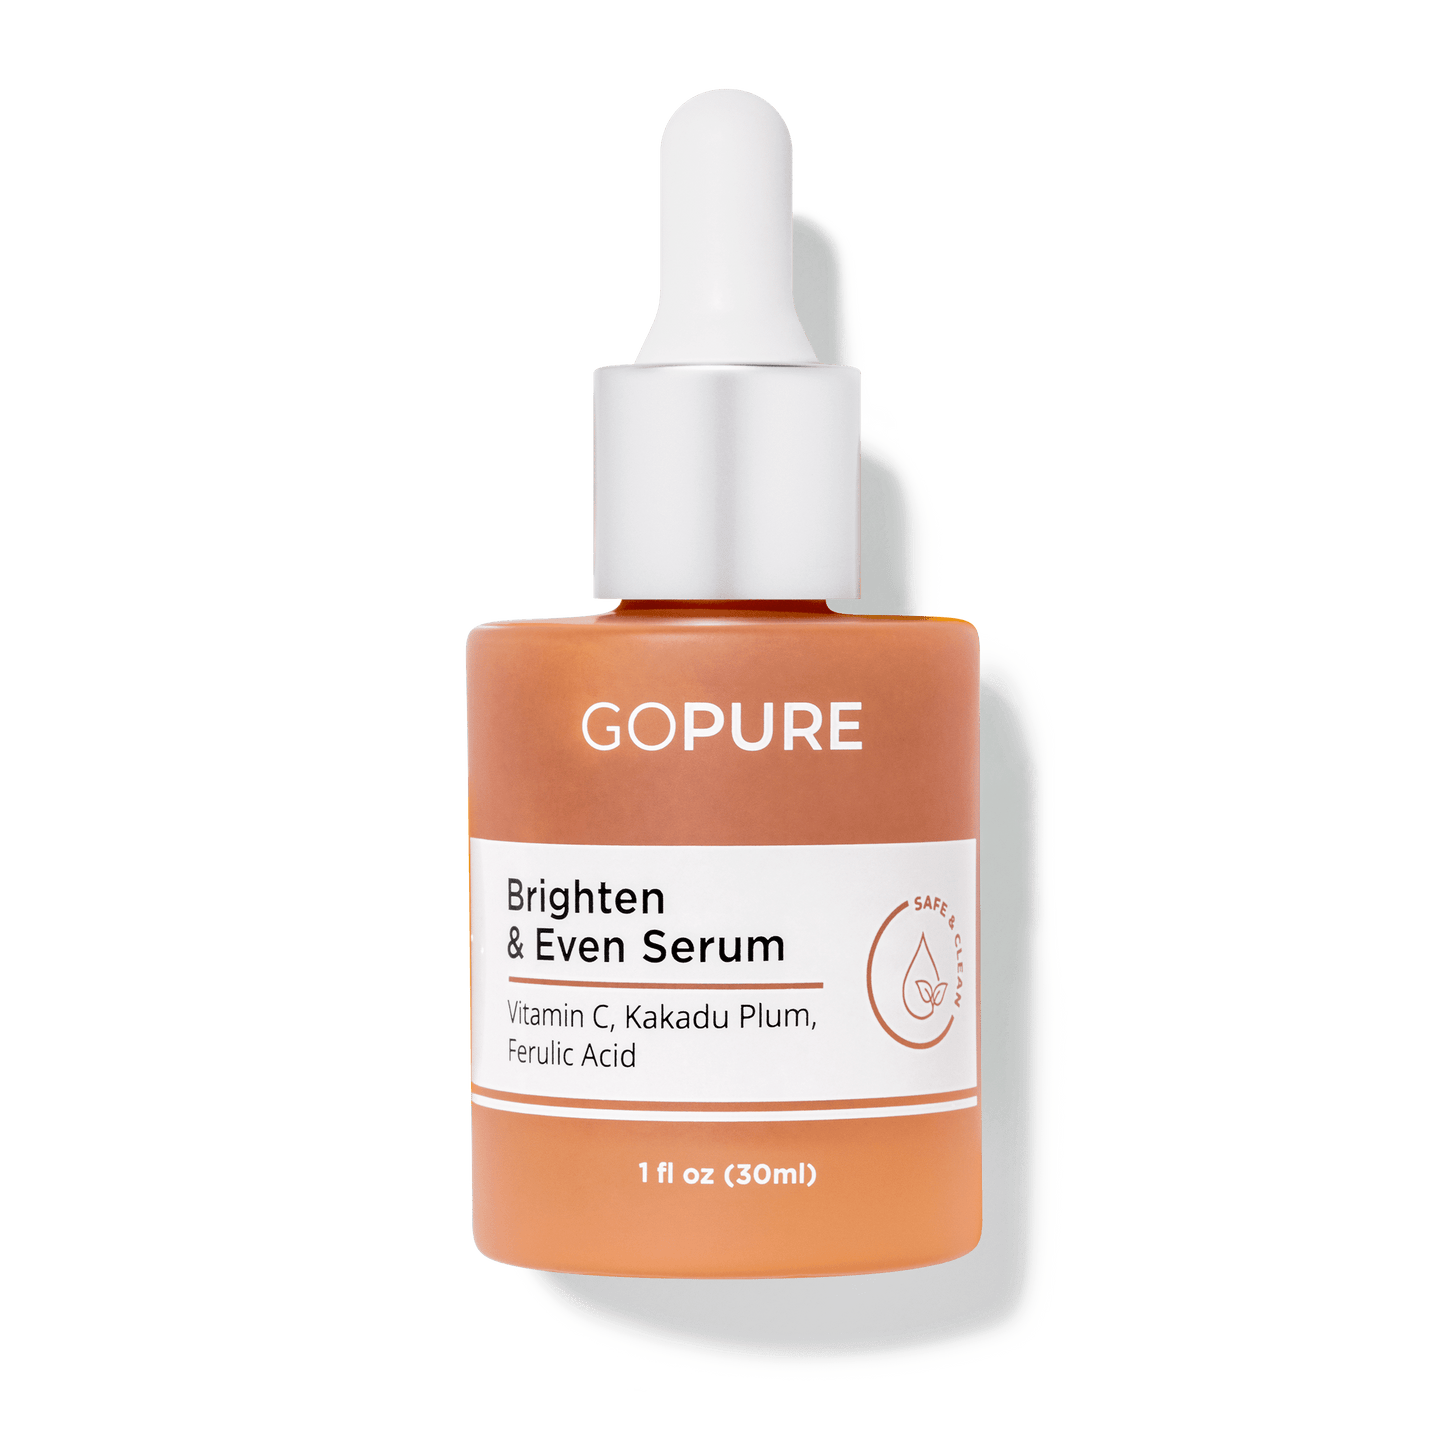 GoPure Brighten & Even Serum in a peach-colored bottle with a white dropper, containing Vitamin C, Kakadu Plum, and Ferulic Acid, 1 fl oz.